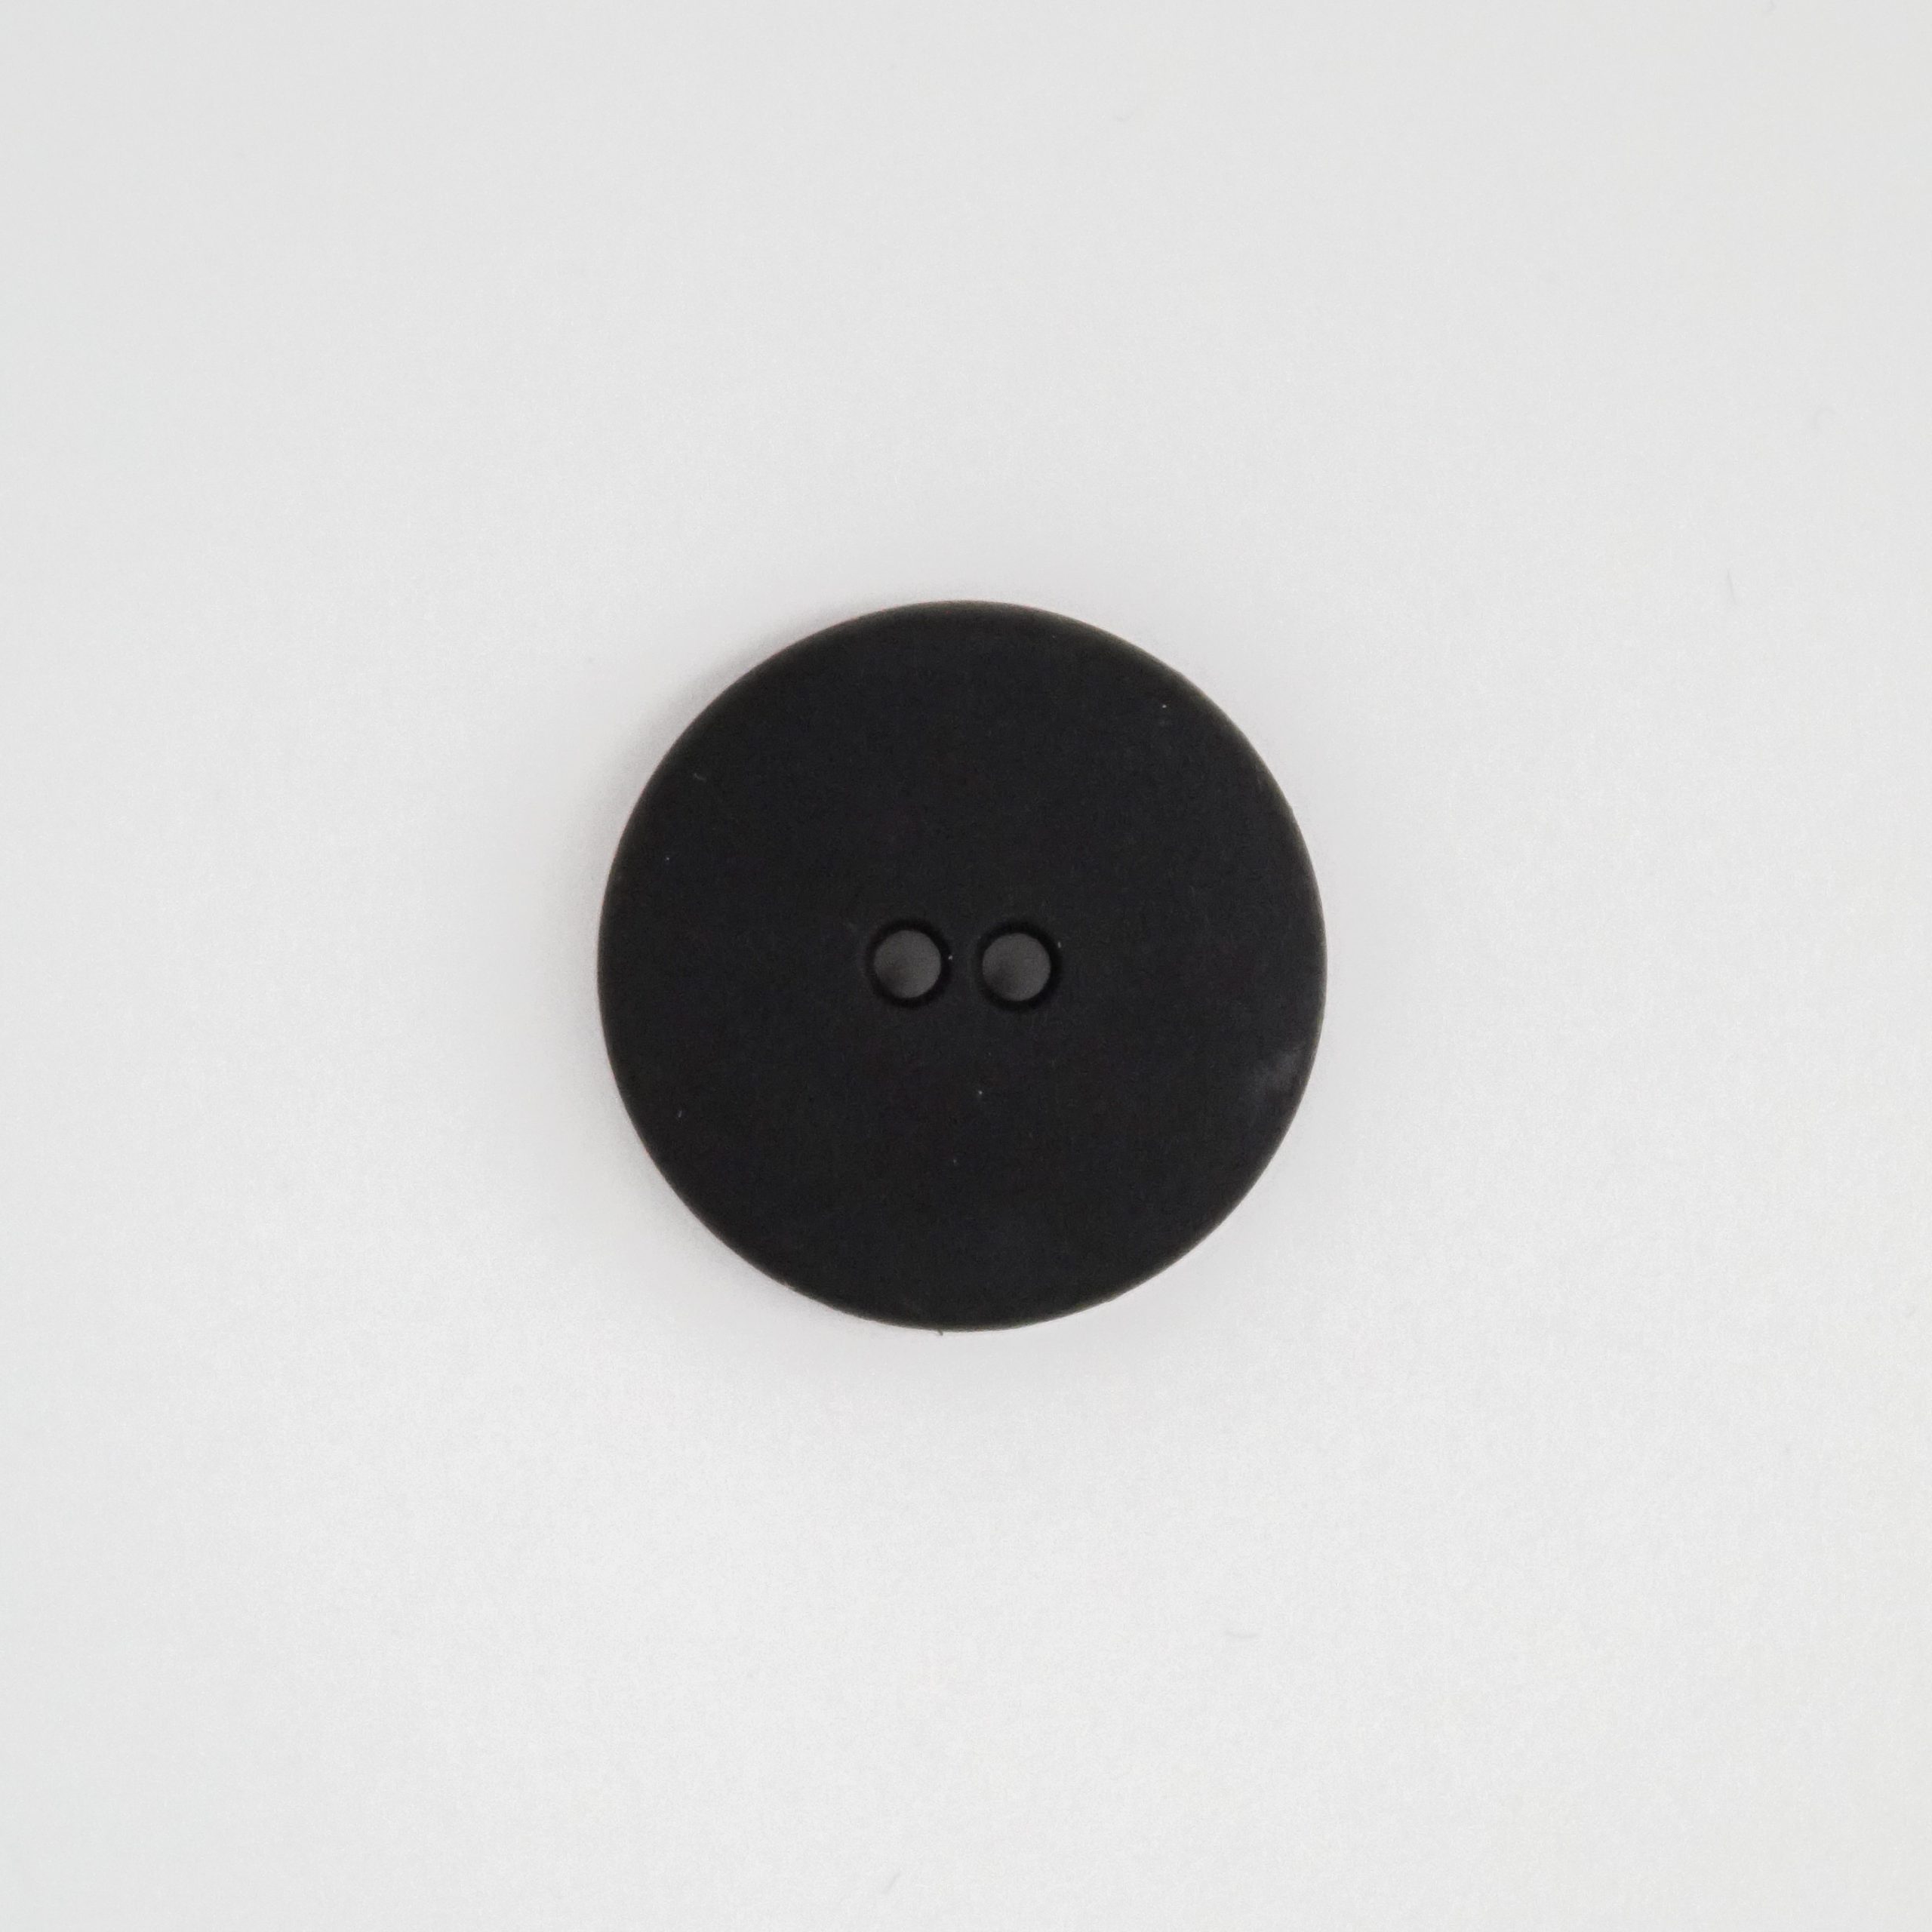 big black button